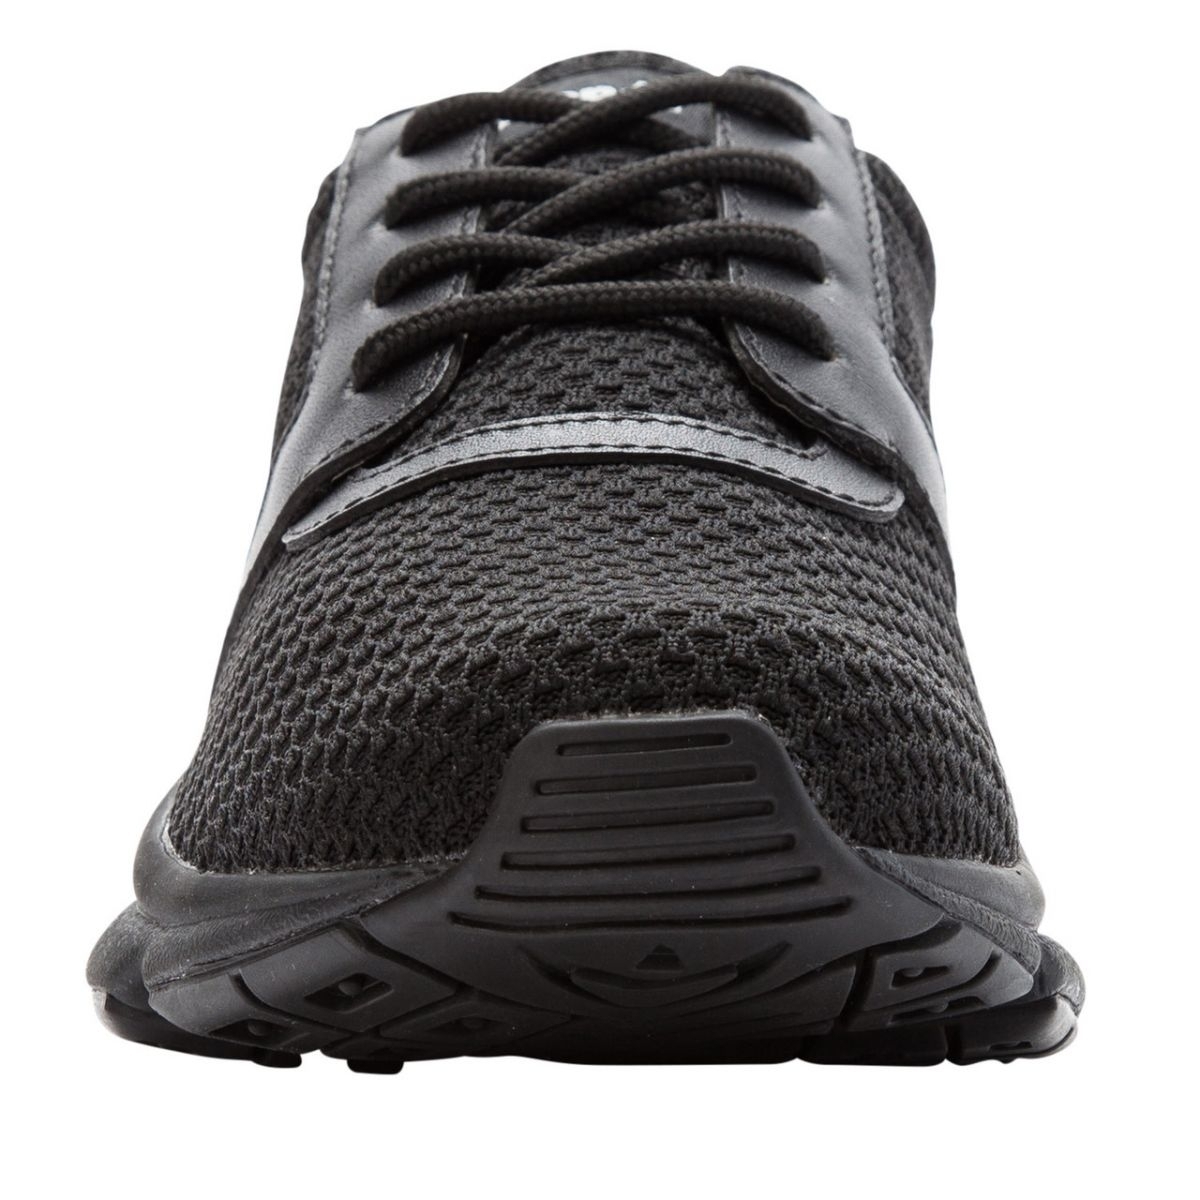 Propet Women's Stability X Walking Shoe Black - WAA032MBLK BLACK - BLACK, 9 Narrow